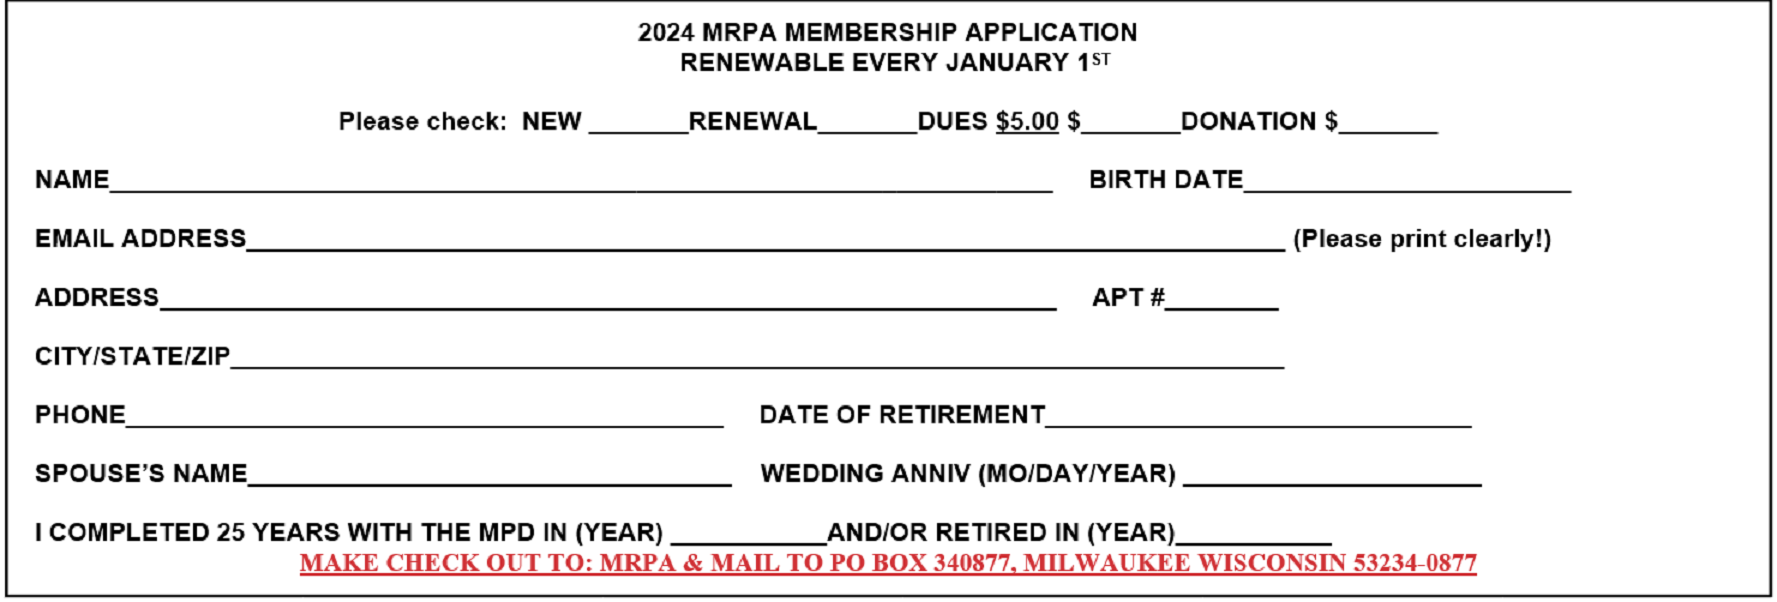 2024 MRPA Application